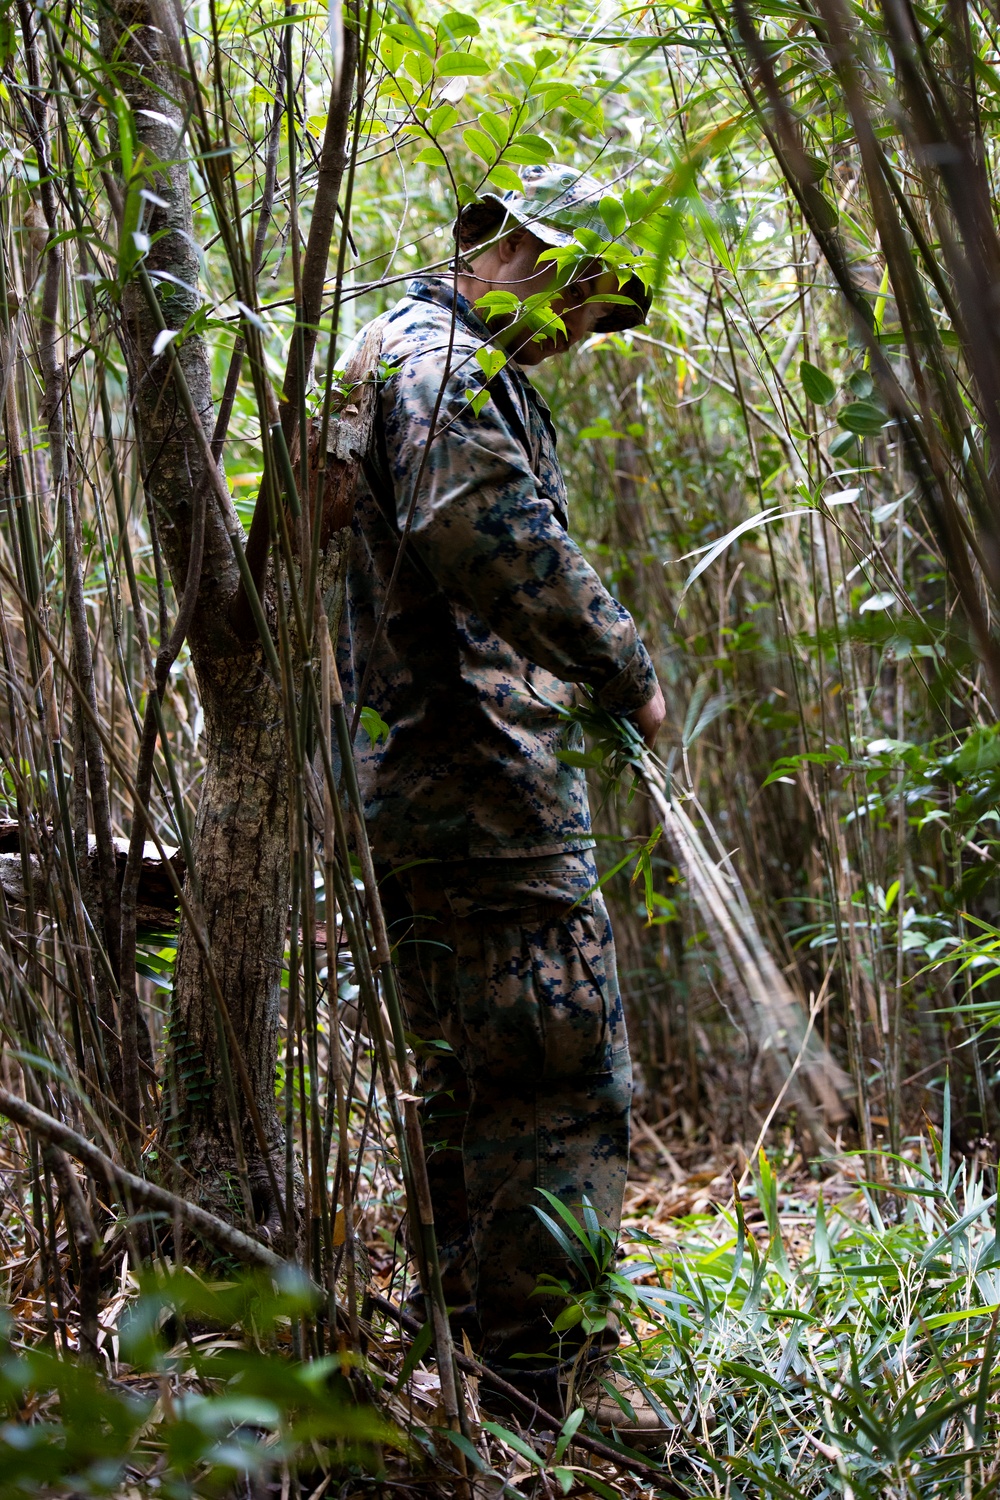 Jungle Survival Course